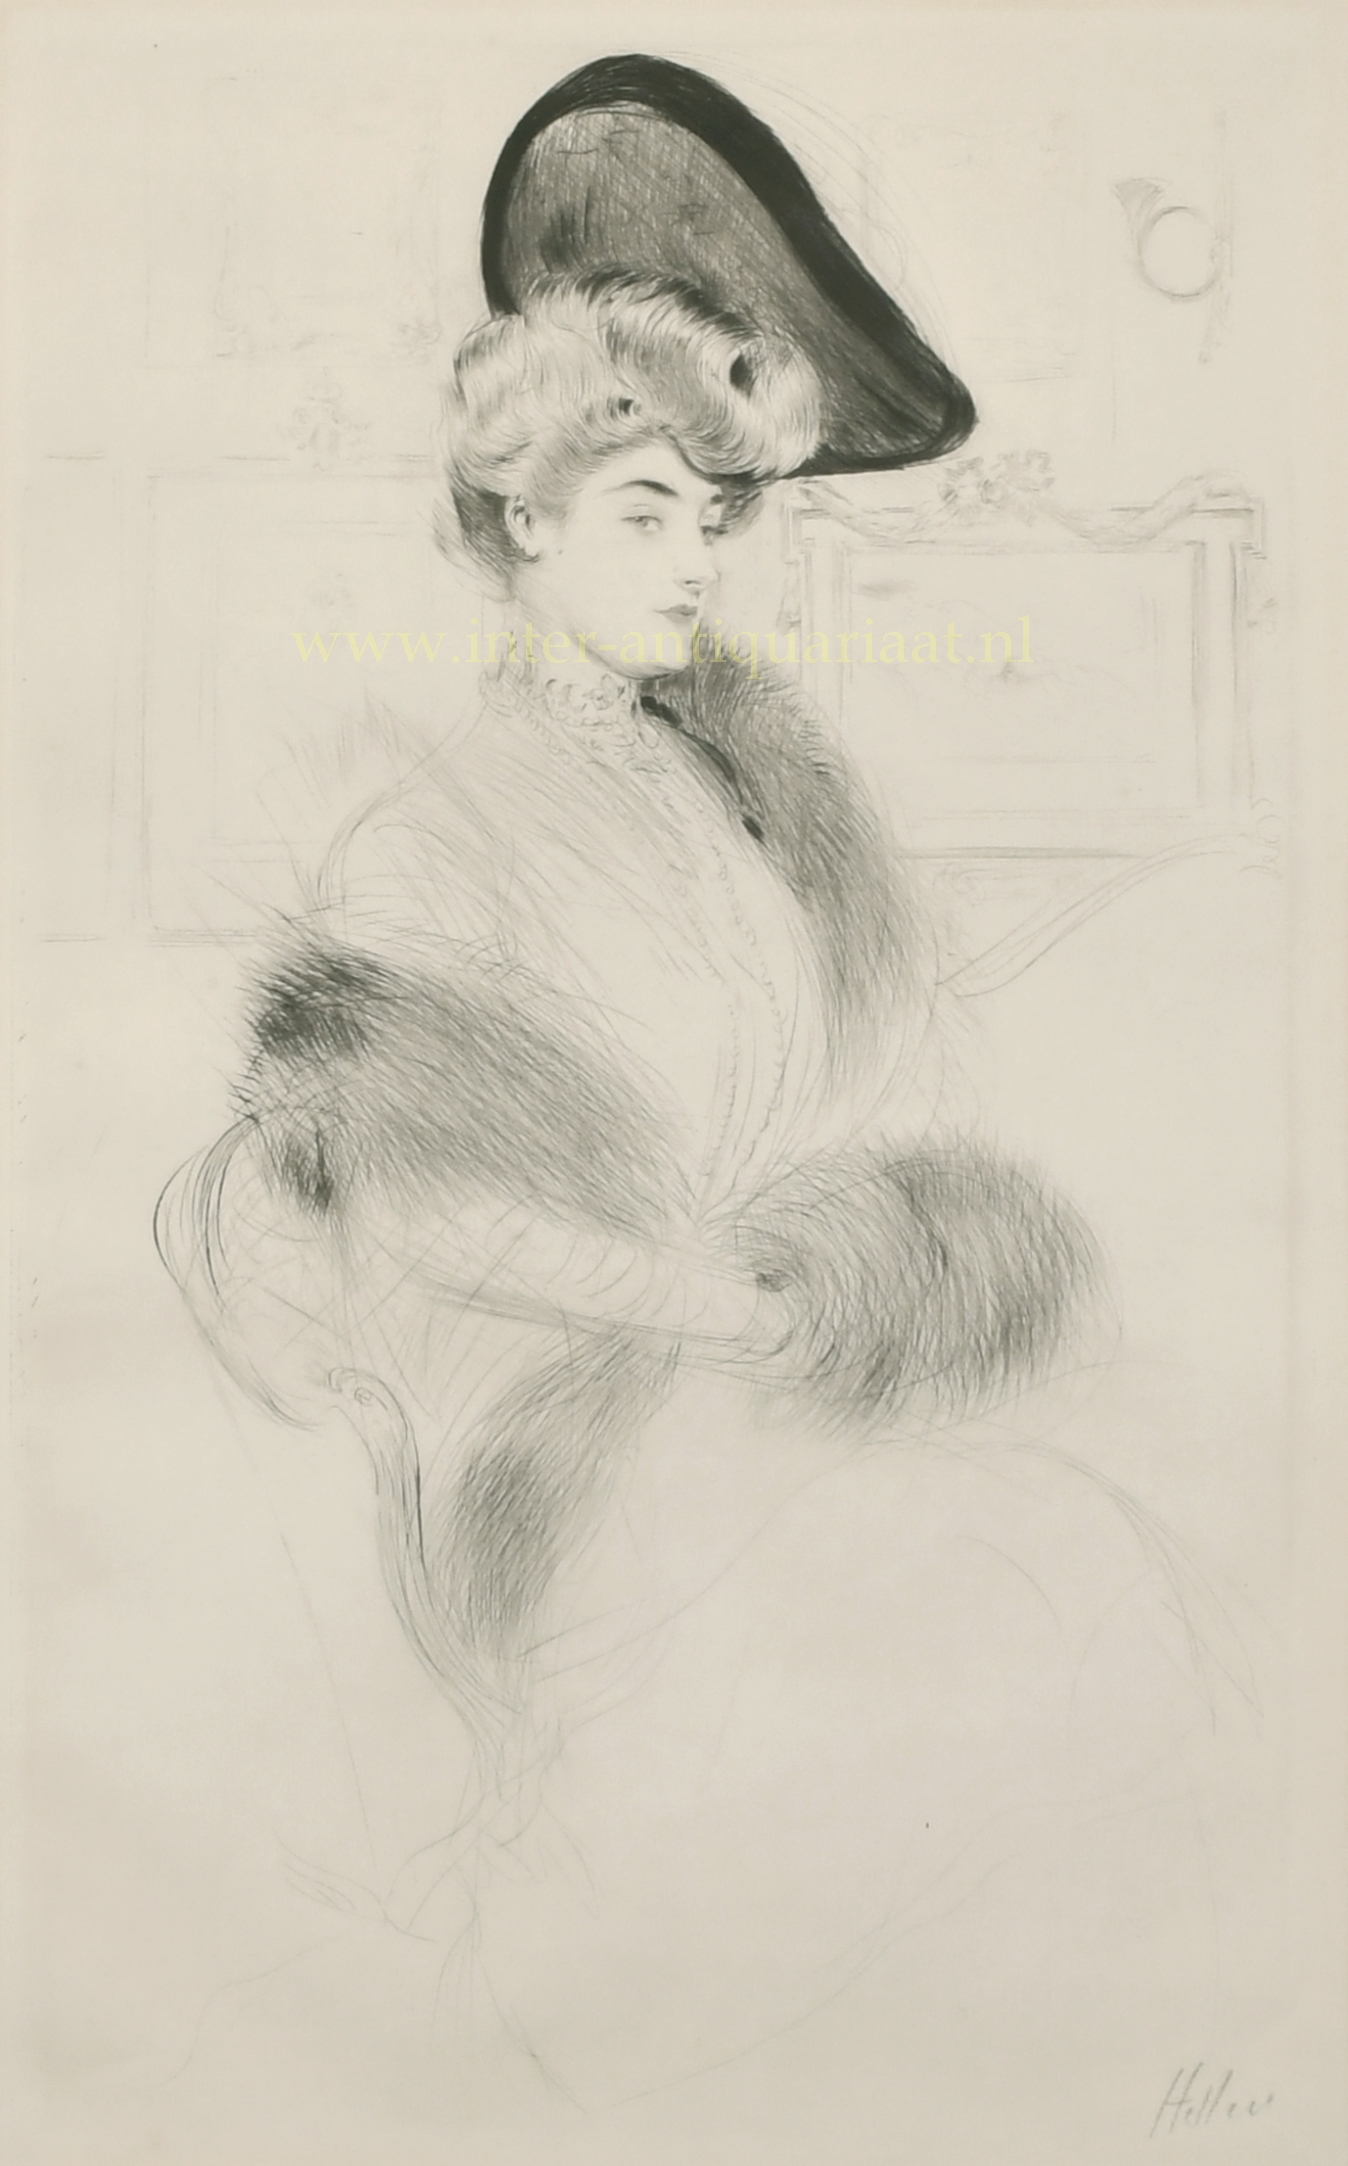 Helleu-- Paul Csar (1859-1927) - Marguerite Labady - Paul Csar Helleu, ca. 1900